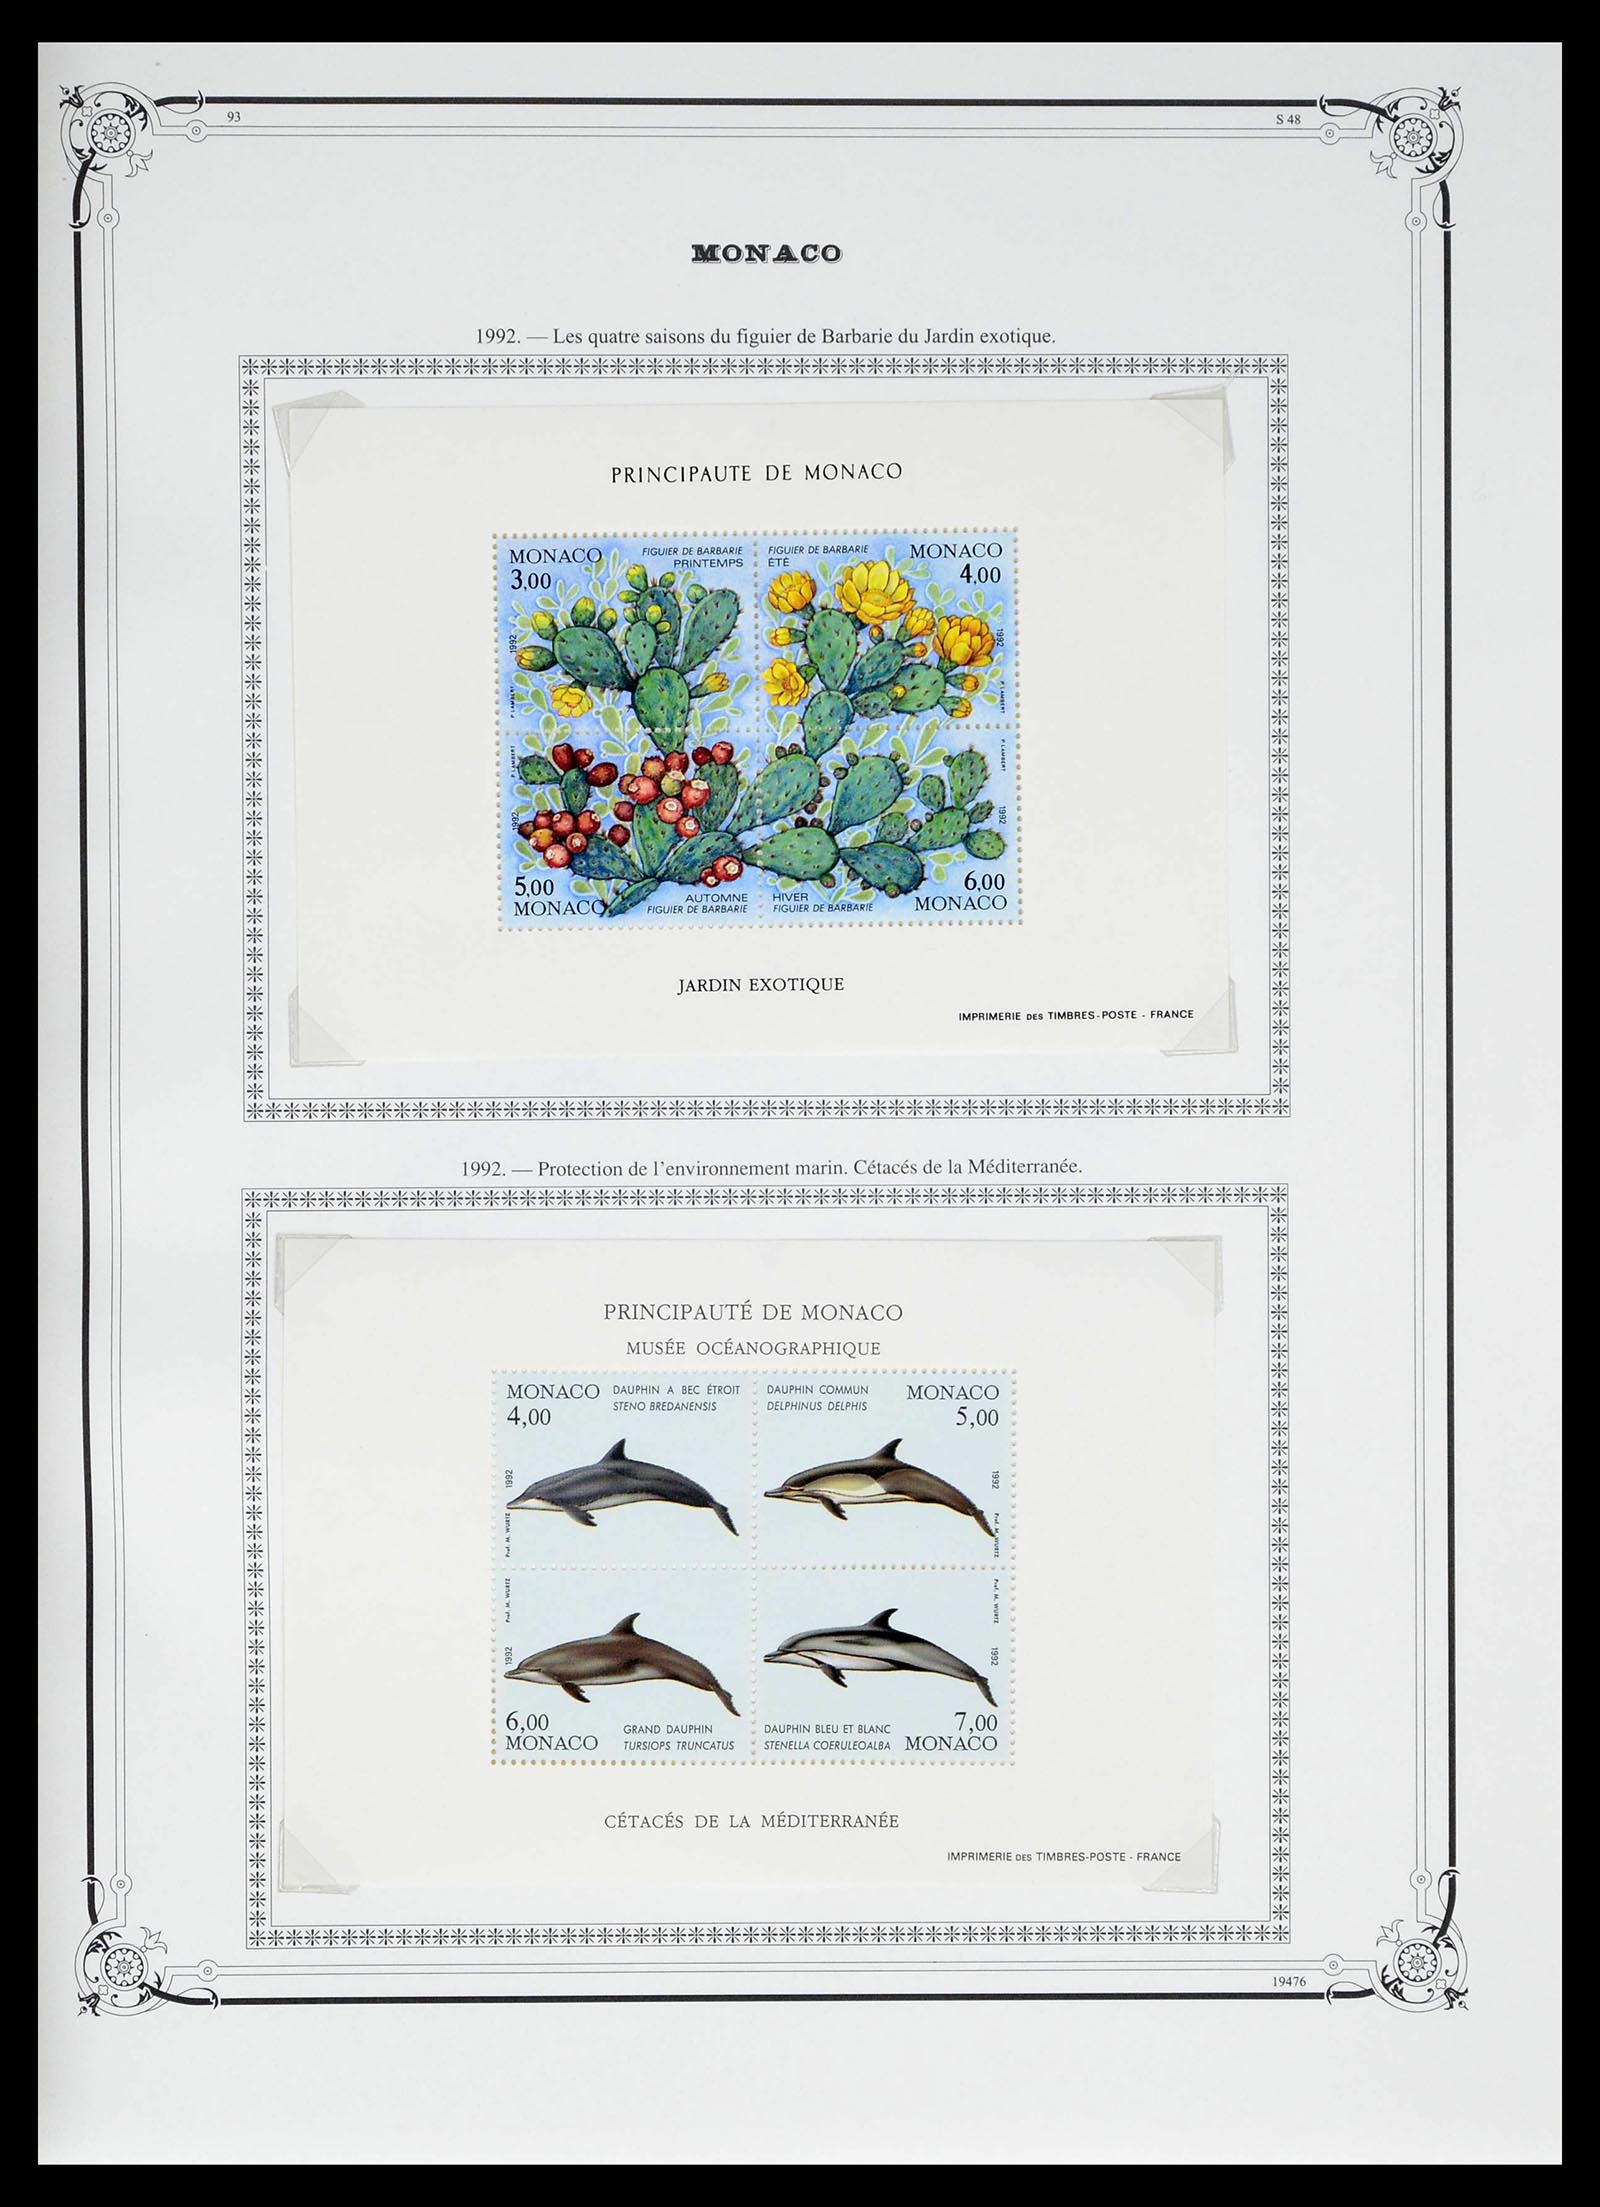 39133 0237 - Stamp collection 39133 Monaco 1885-1996.